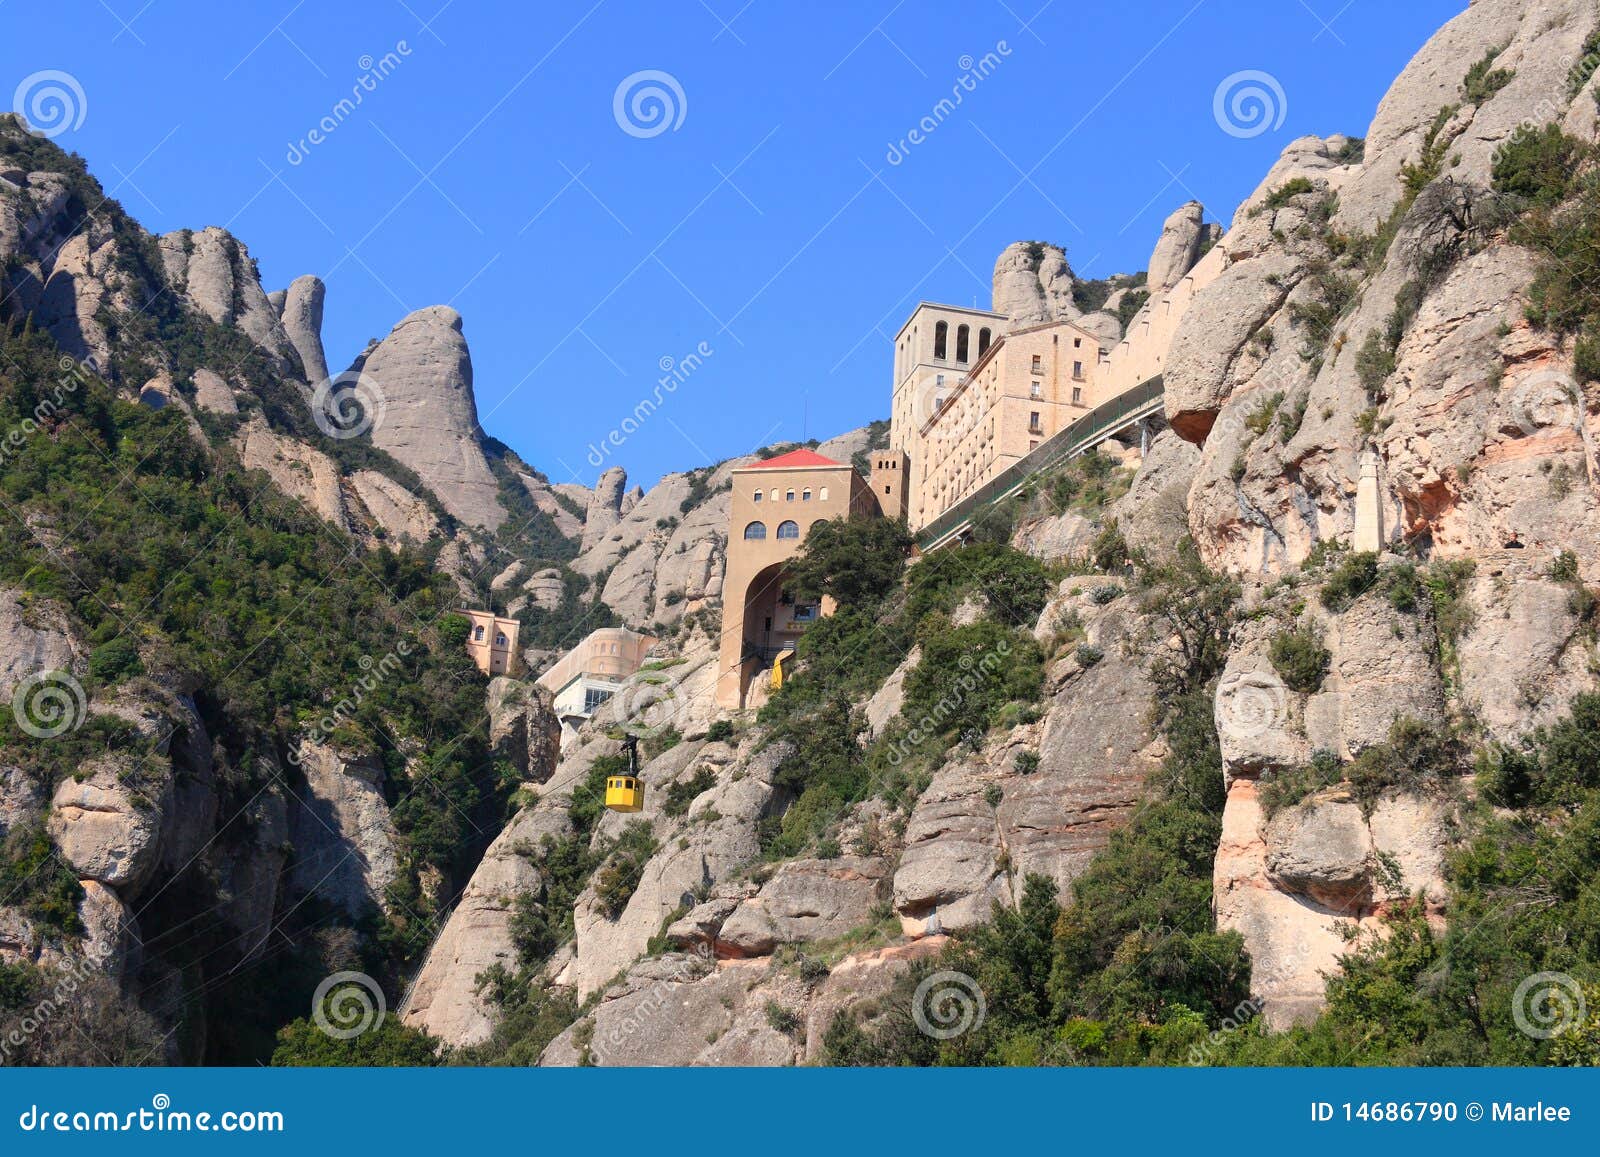 montserrat monastery (catalonia, spain)